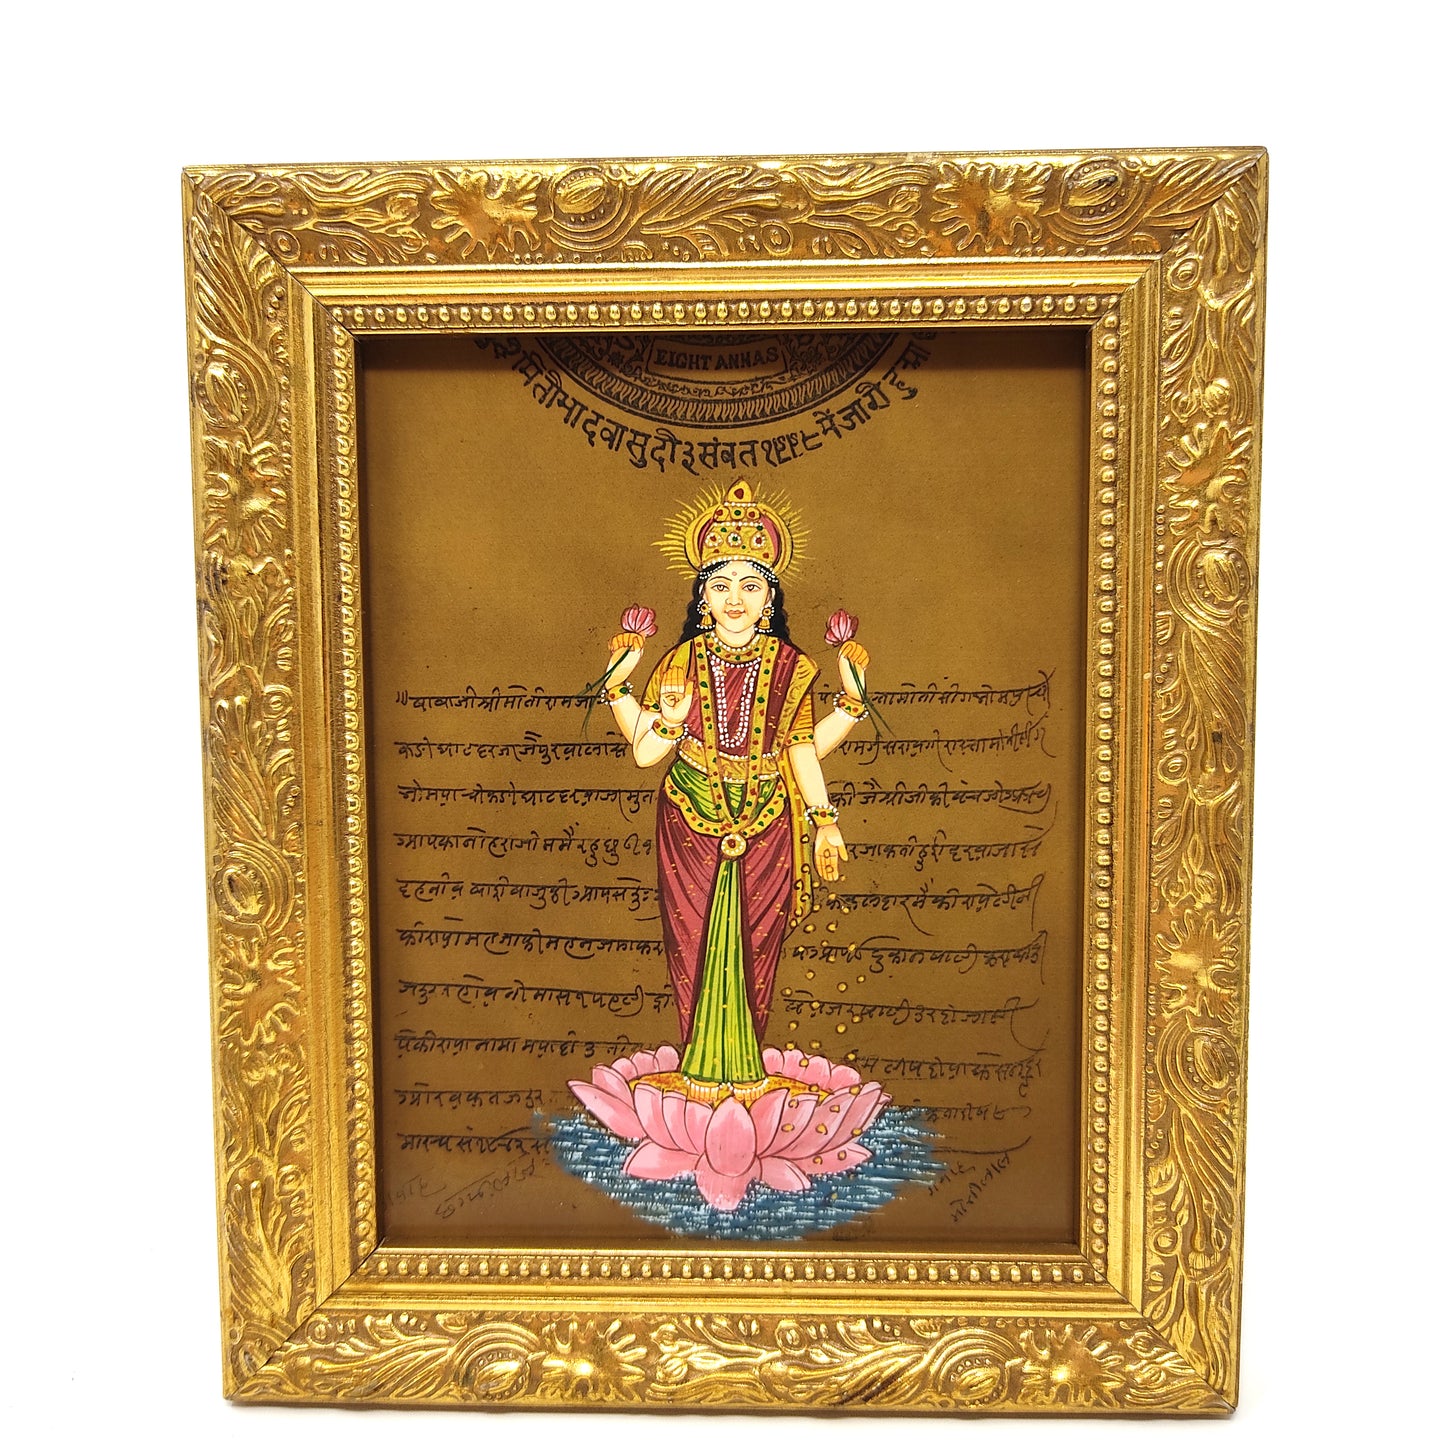 Framed Replica Rajasthani Miniature Painting Depicting India Goddess Lakshmi 5.75"